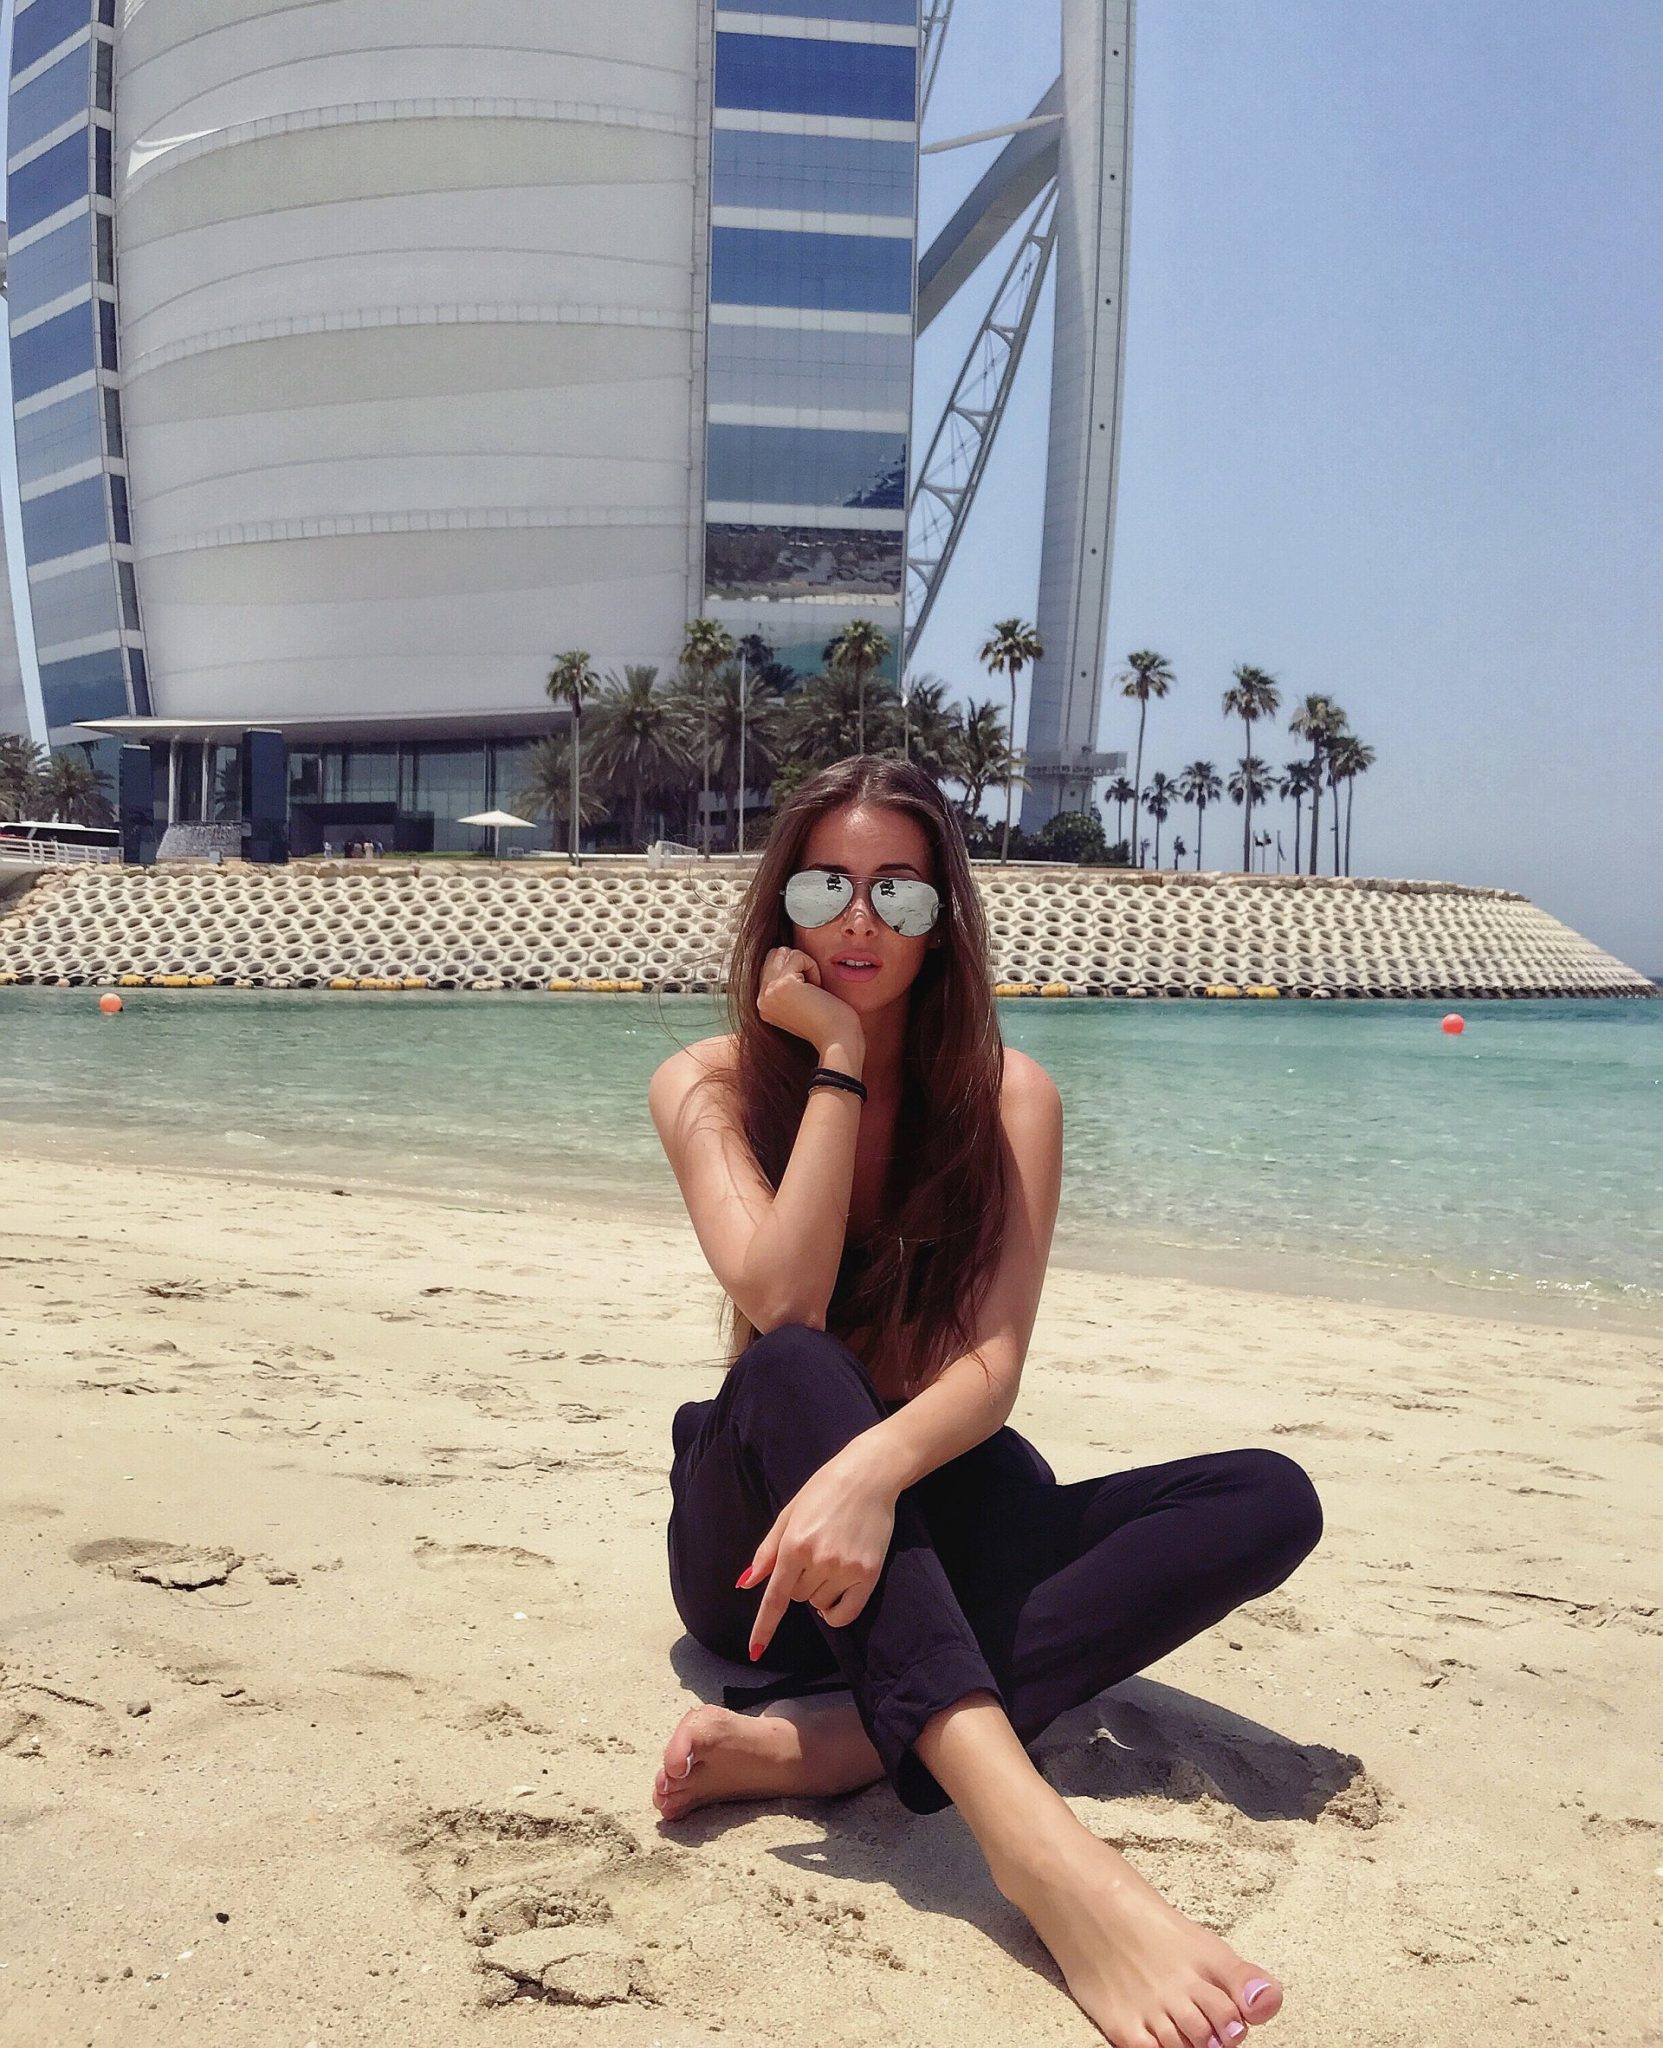 Dubai tengerpart